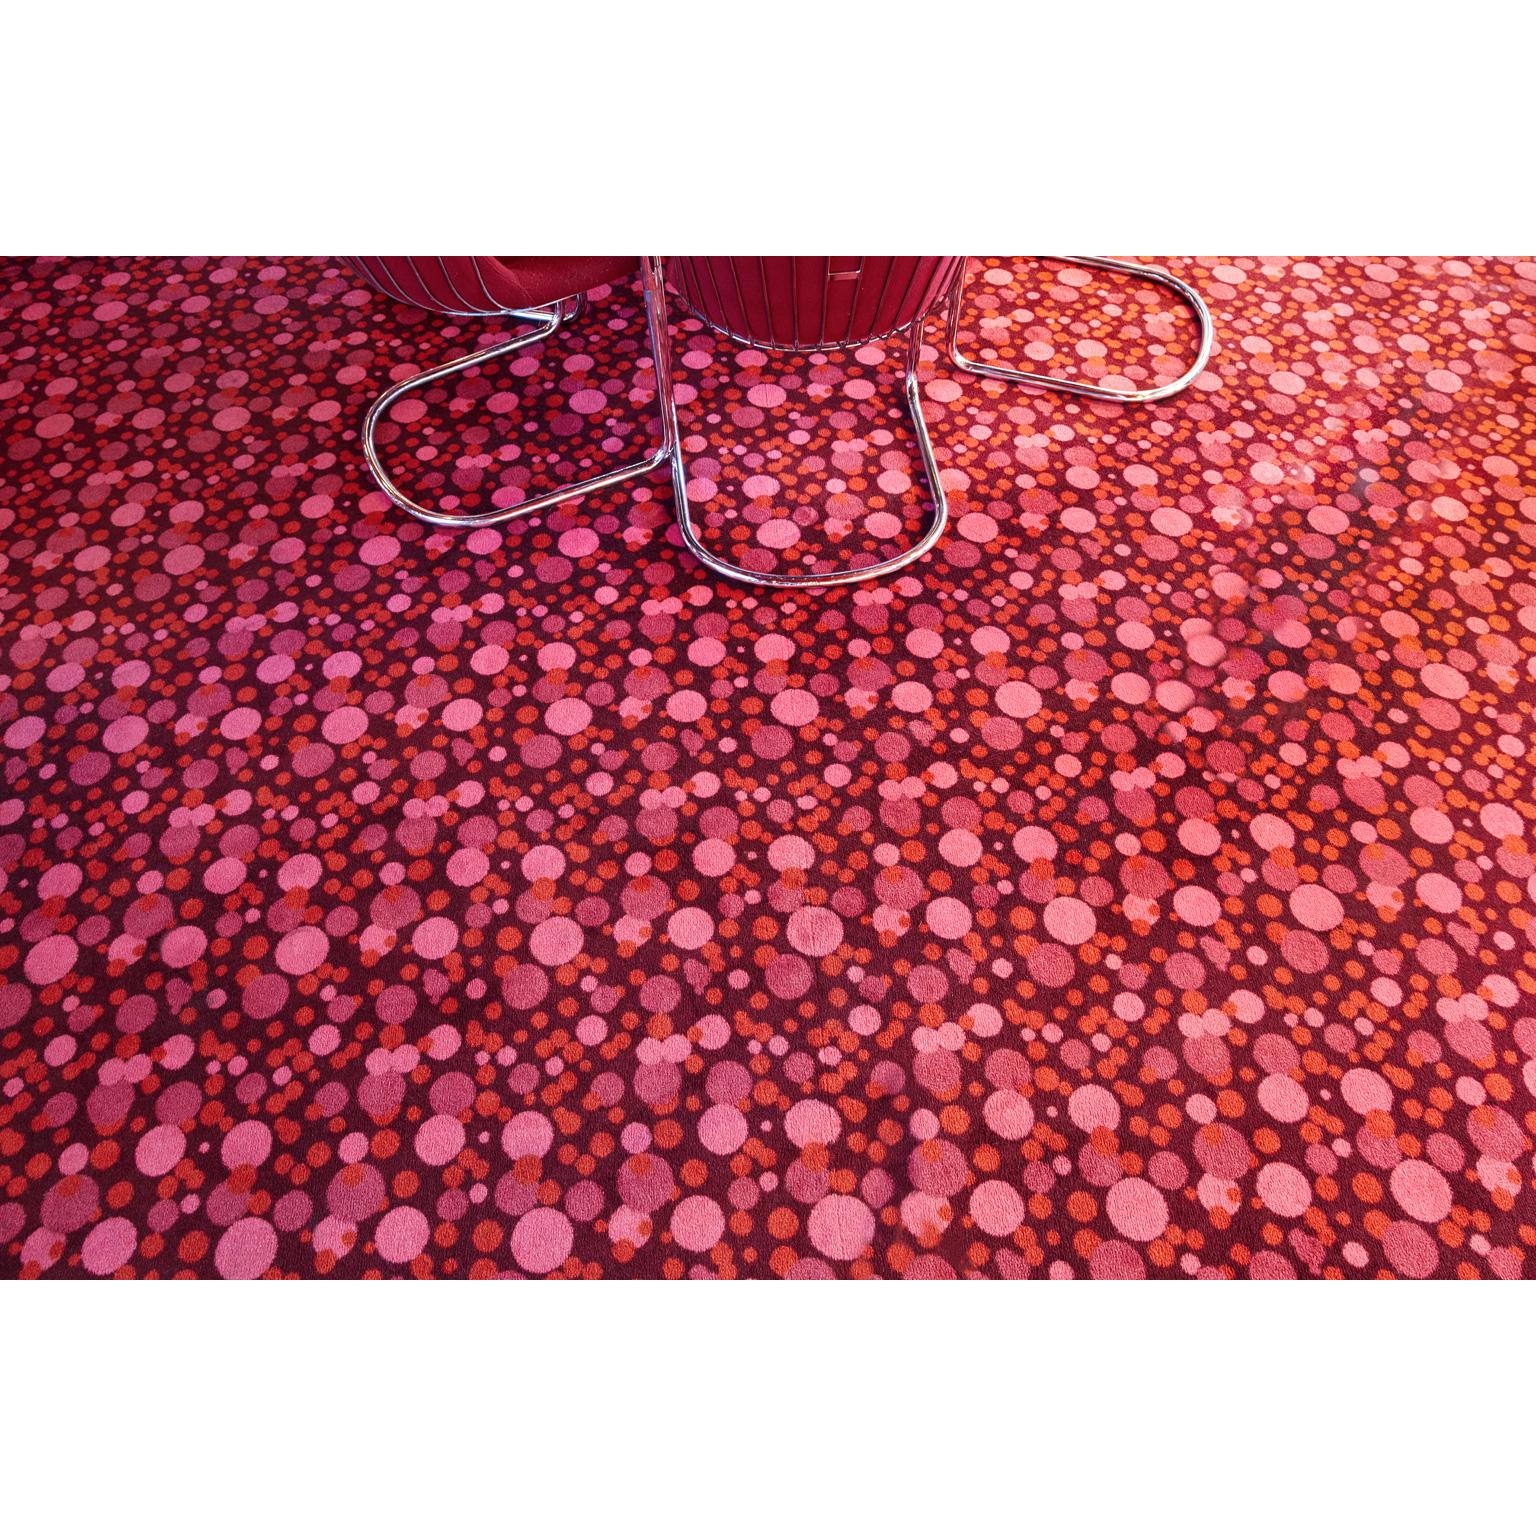 Frank Schott Color Photograph - Magic Carpet - vibrant color observations of mid century Mediterranean interior